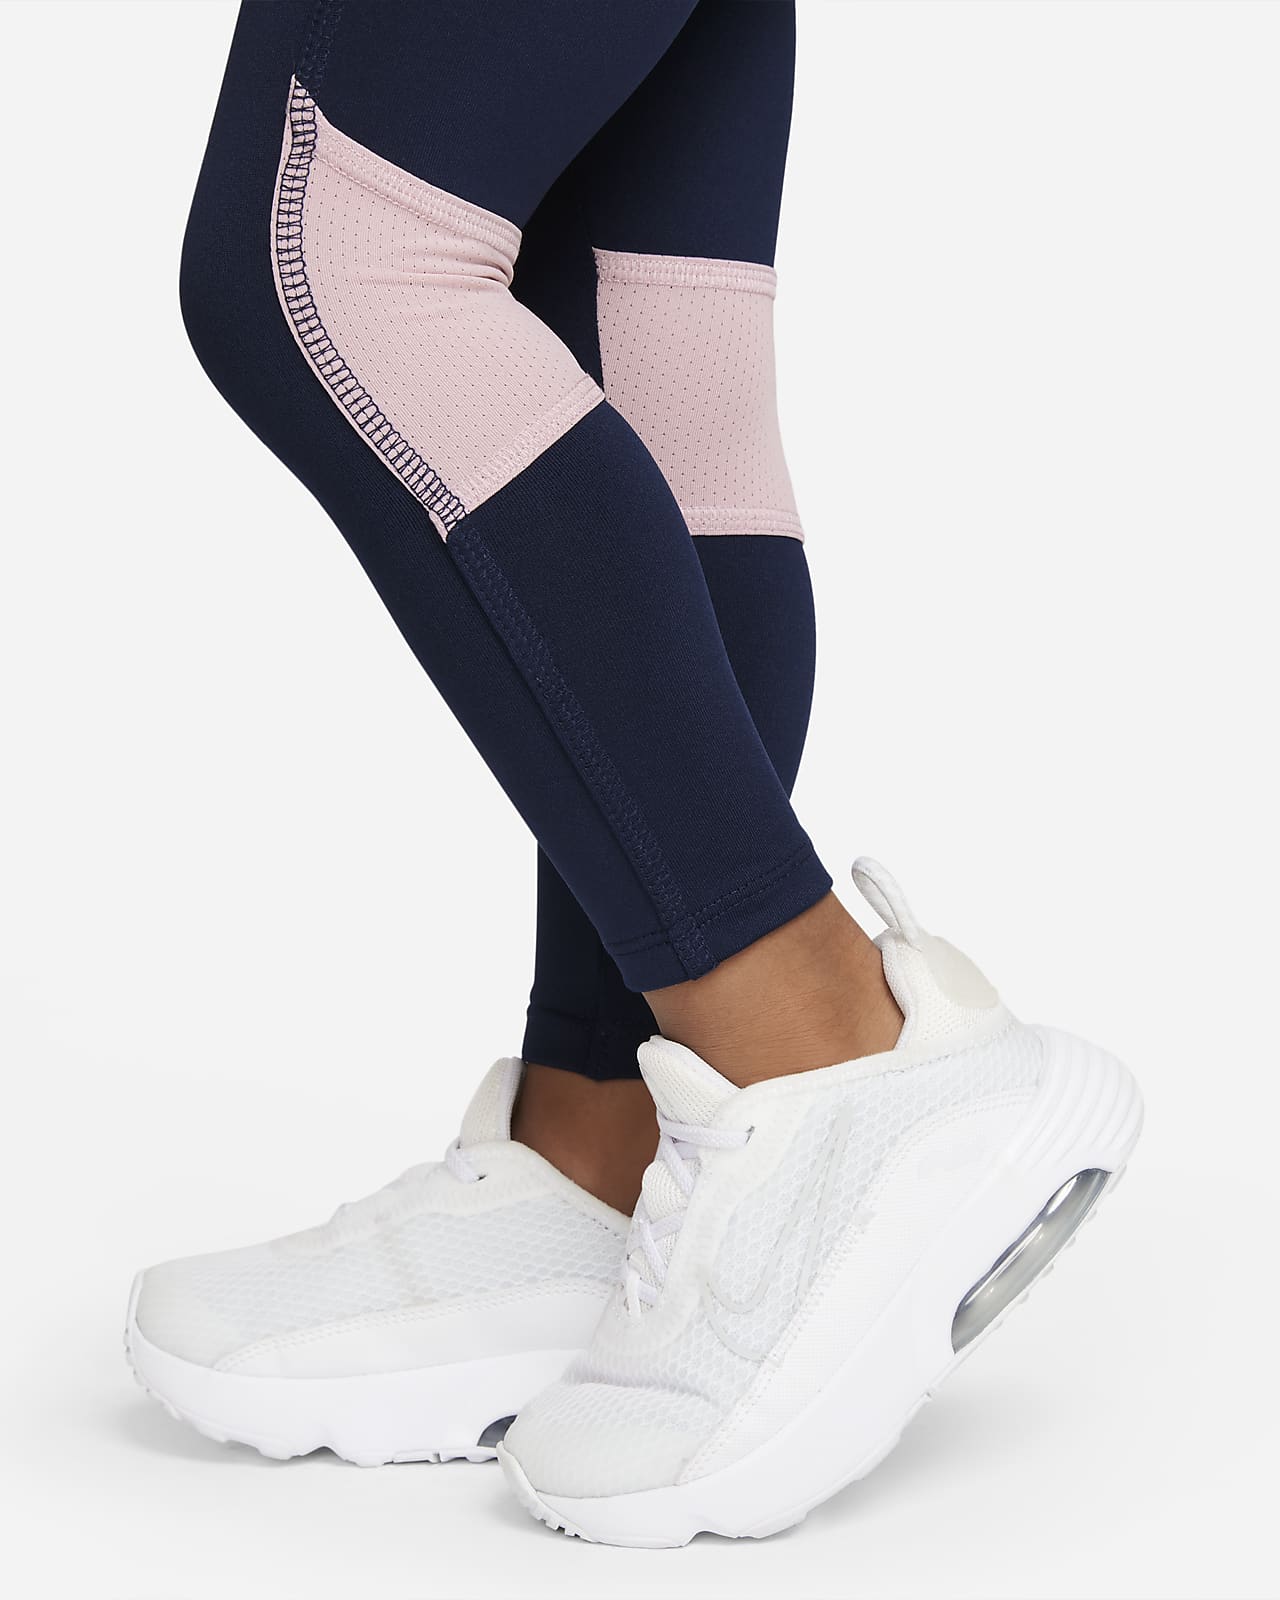 Nike Dri-FIT Baby (12-24M) Hooded Top and Leggings Set